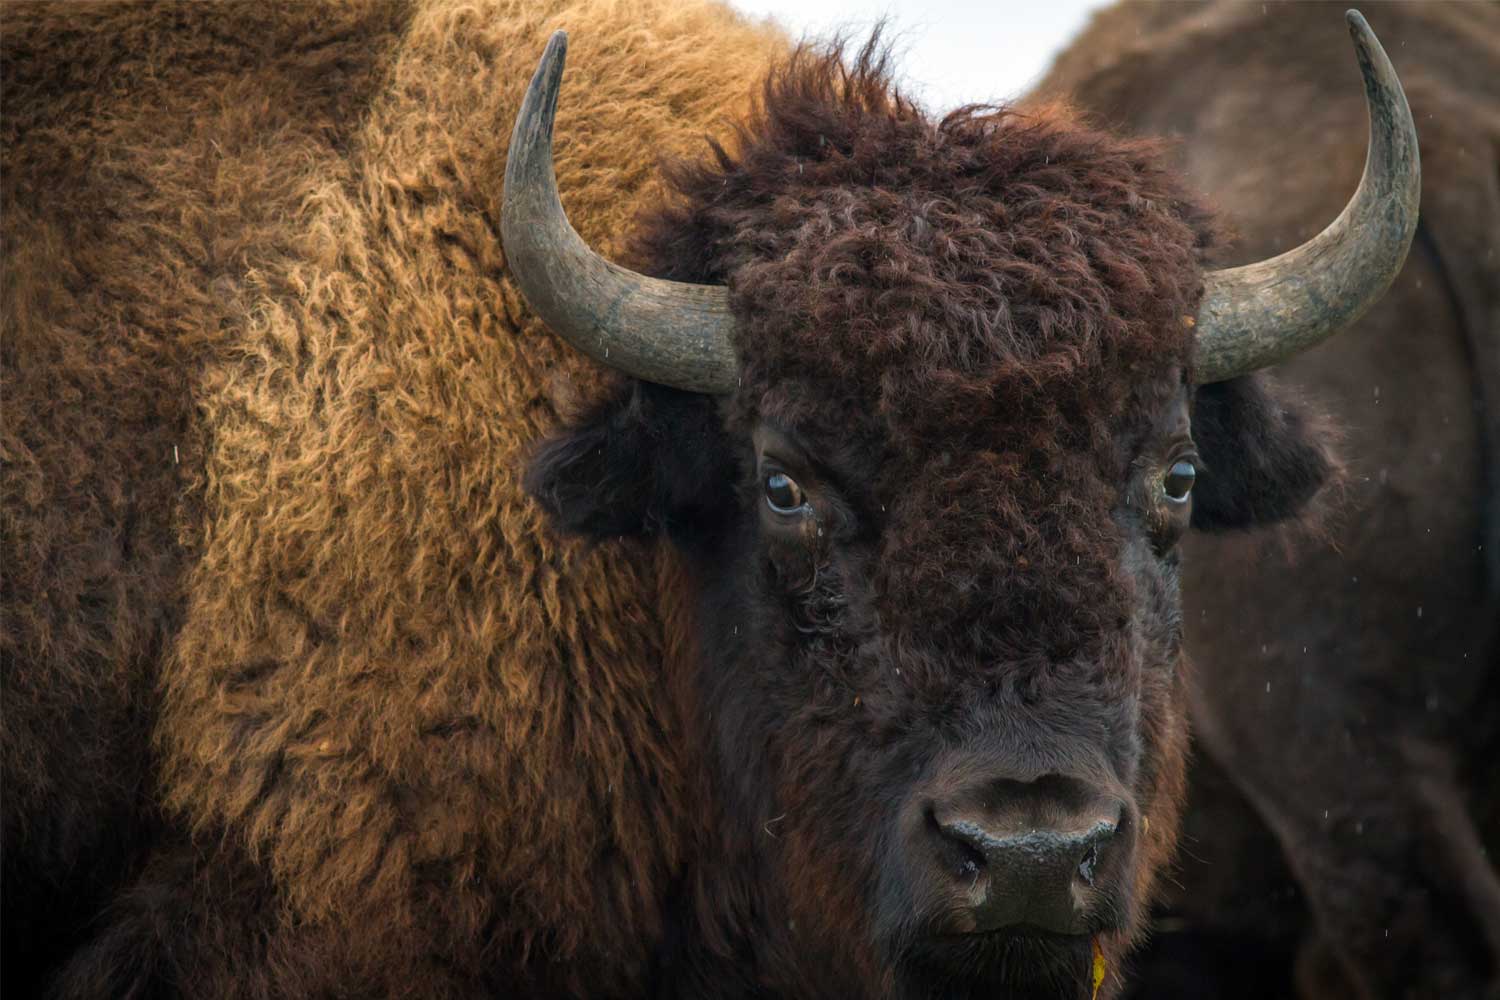 Closeup of bison's face